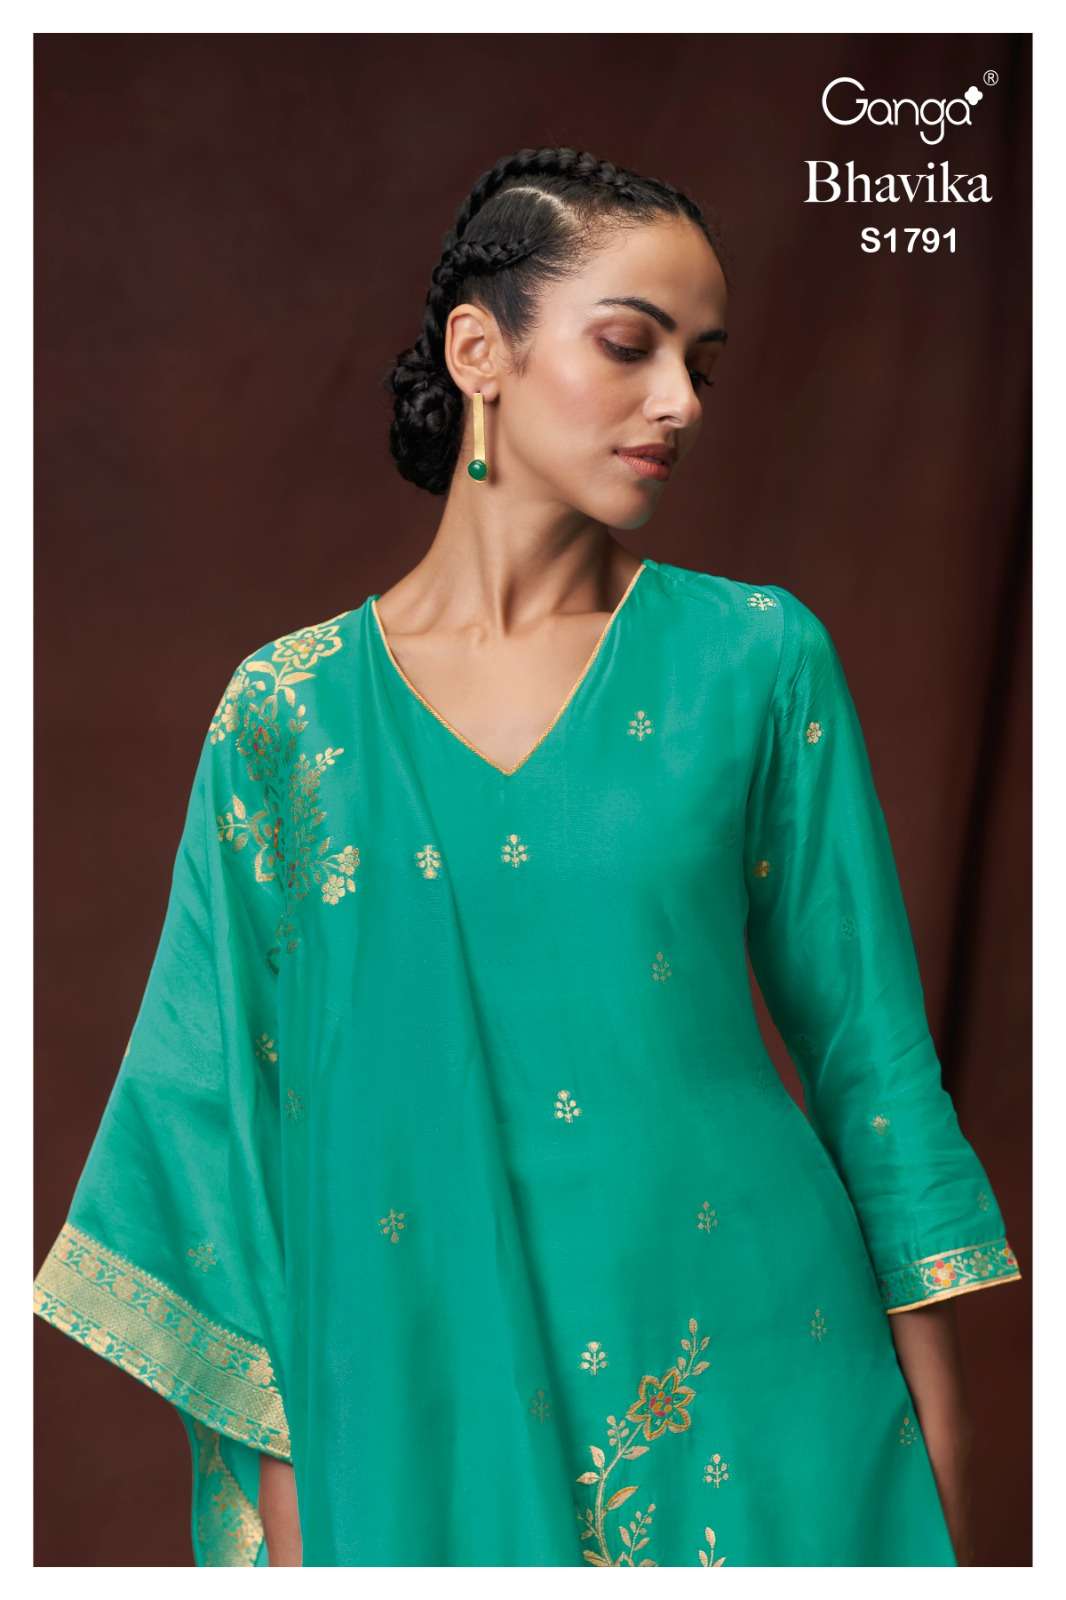 Ganga Bhavika 1791 Fancy Jacquard Tradition Ladies Suit Exporter